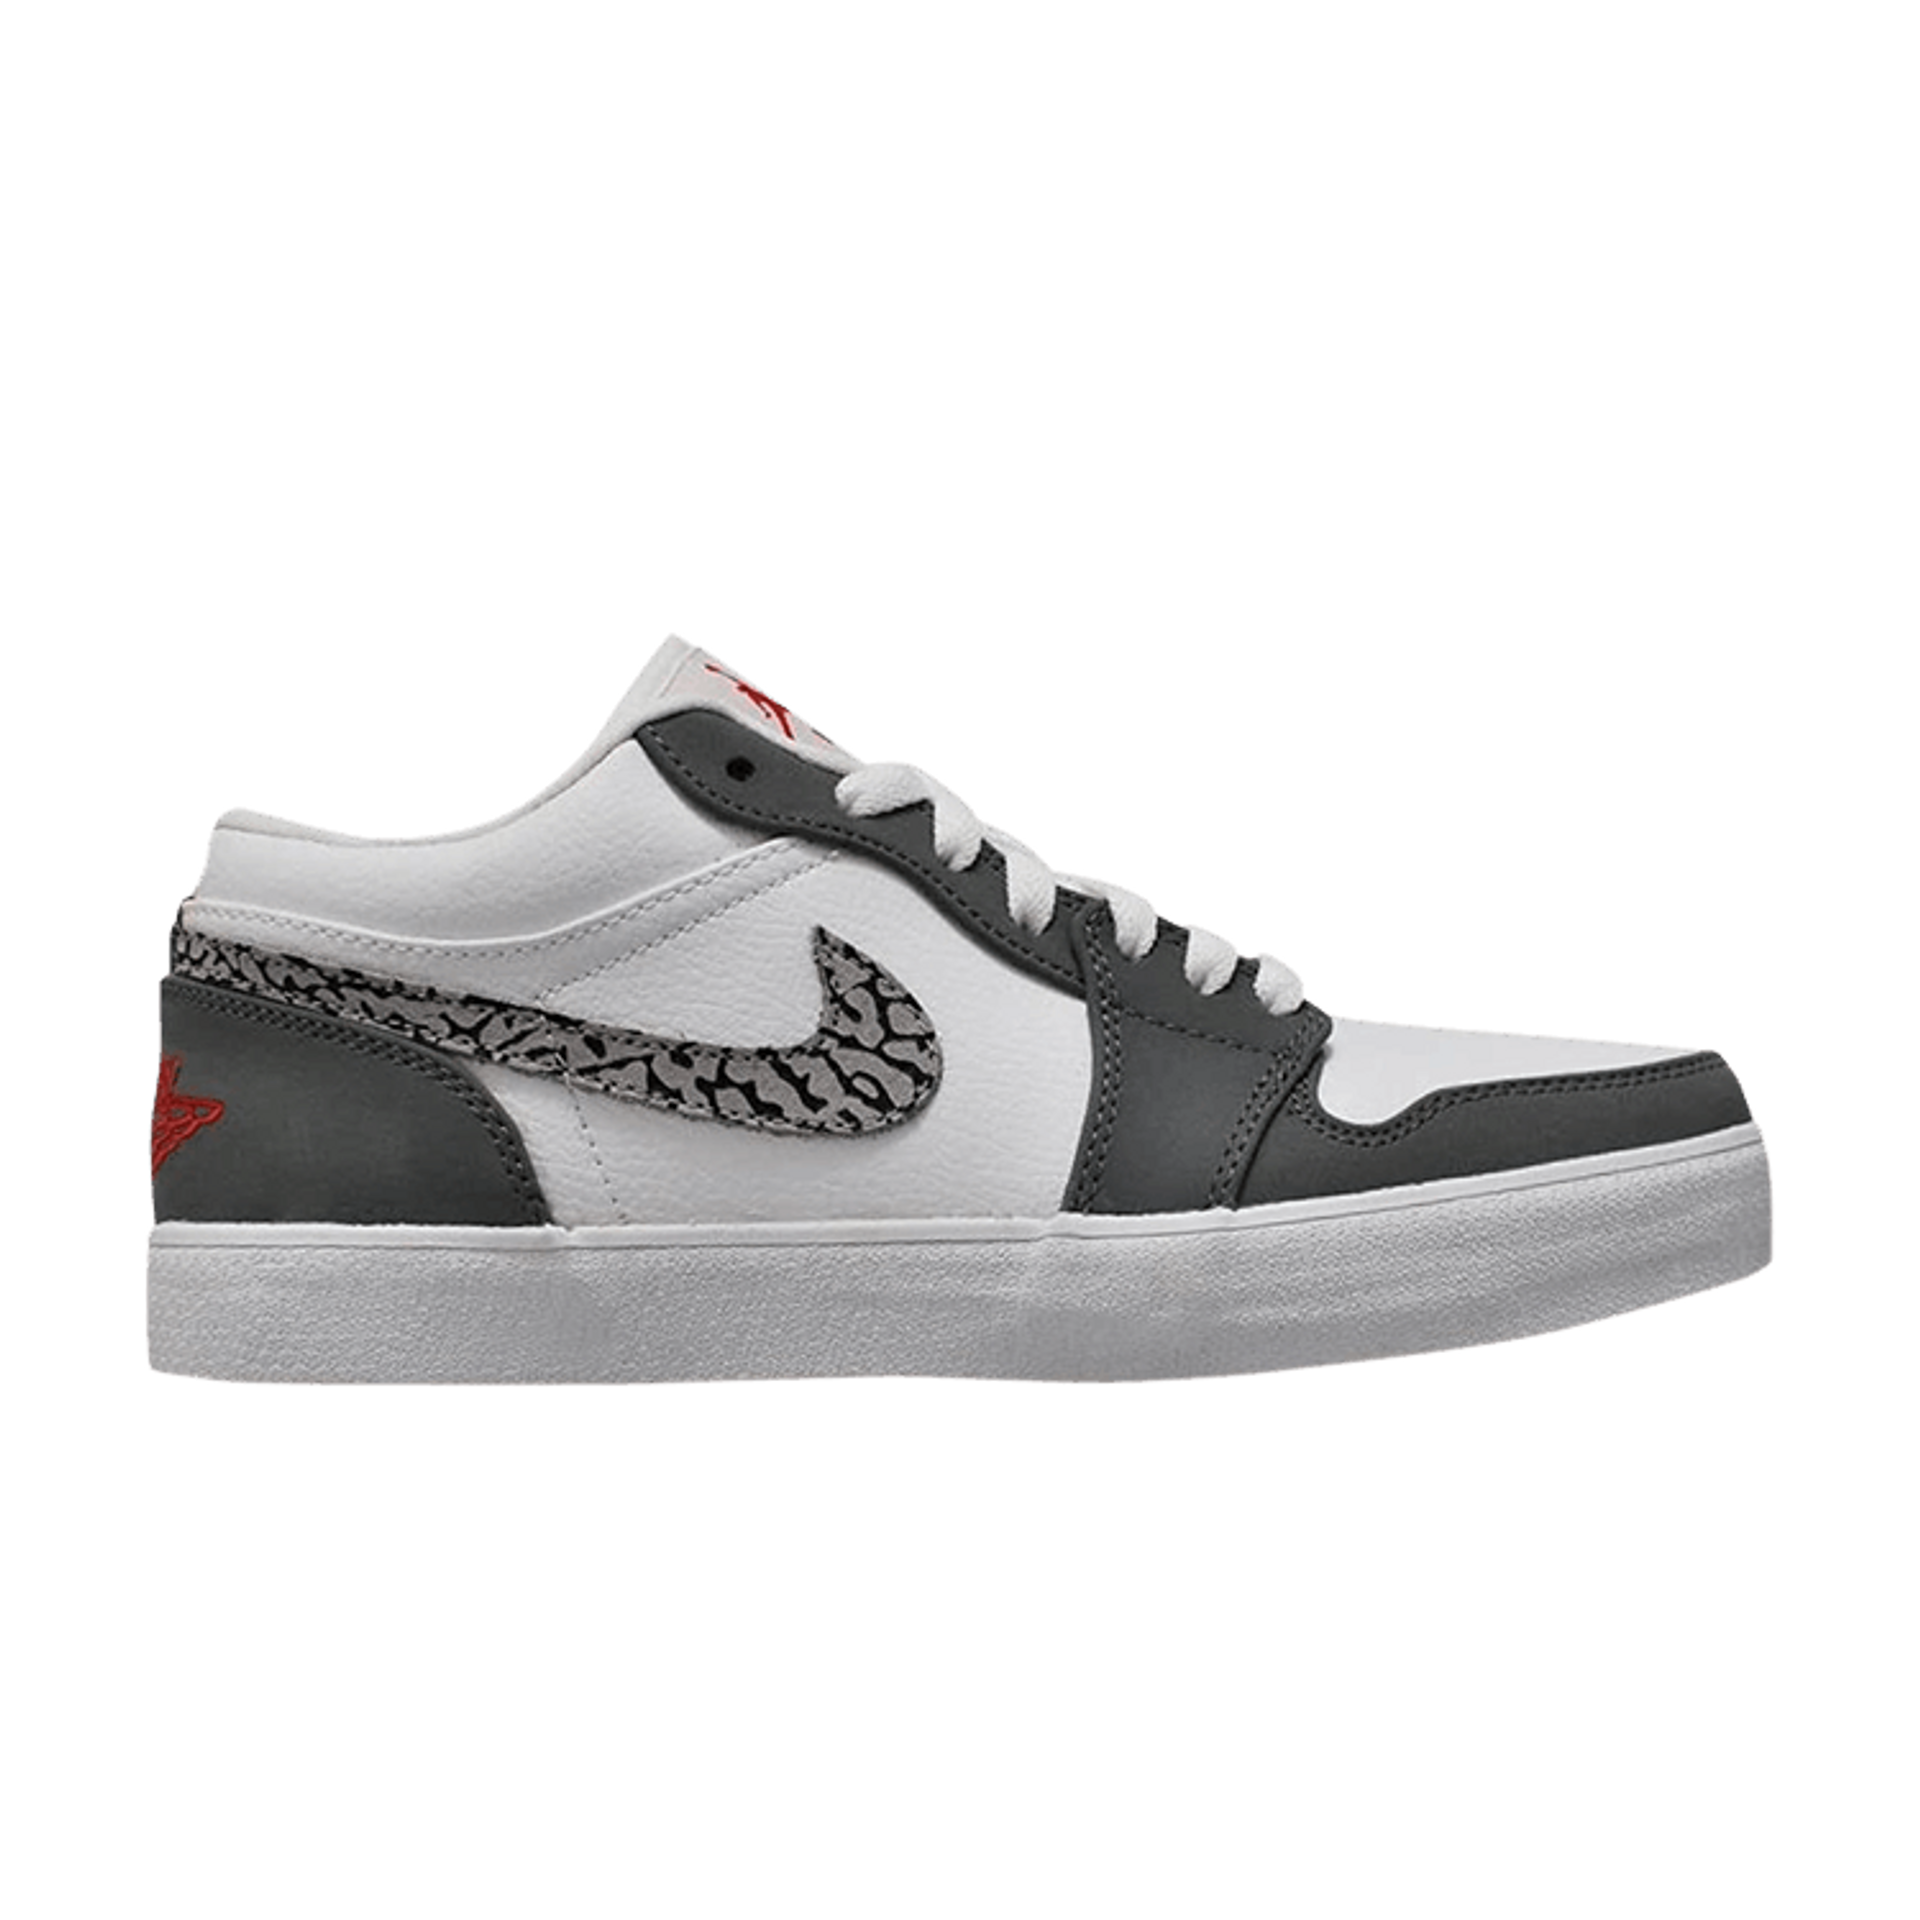 Air Jordan 1 V.2 Low Leather 'White Cool Grey'